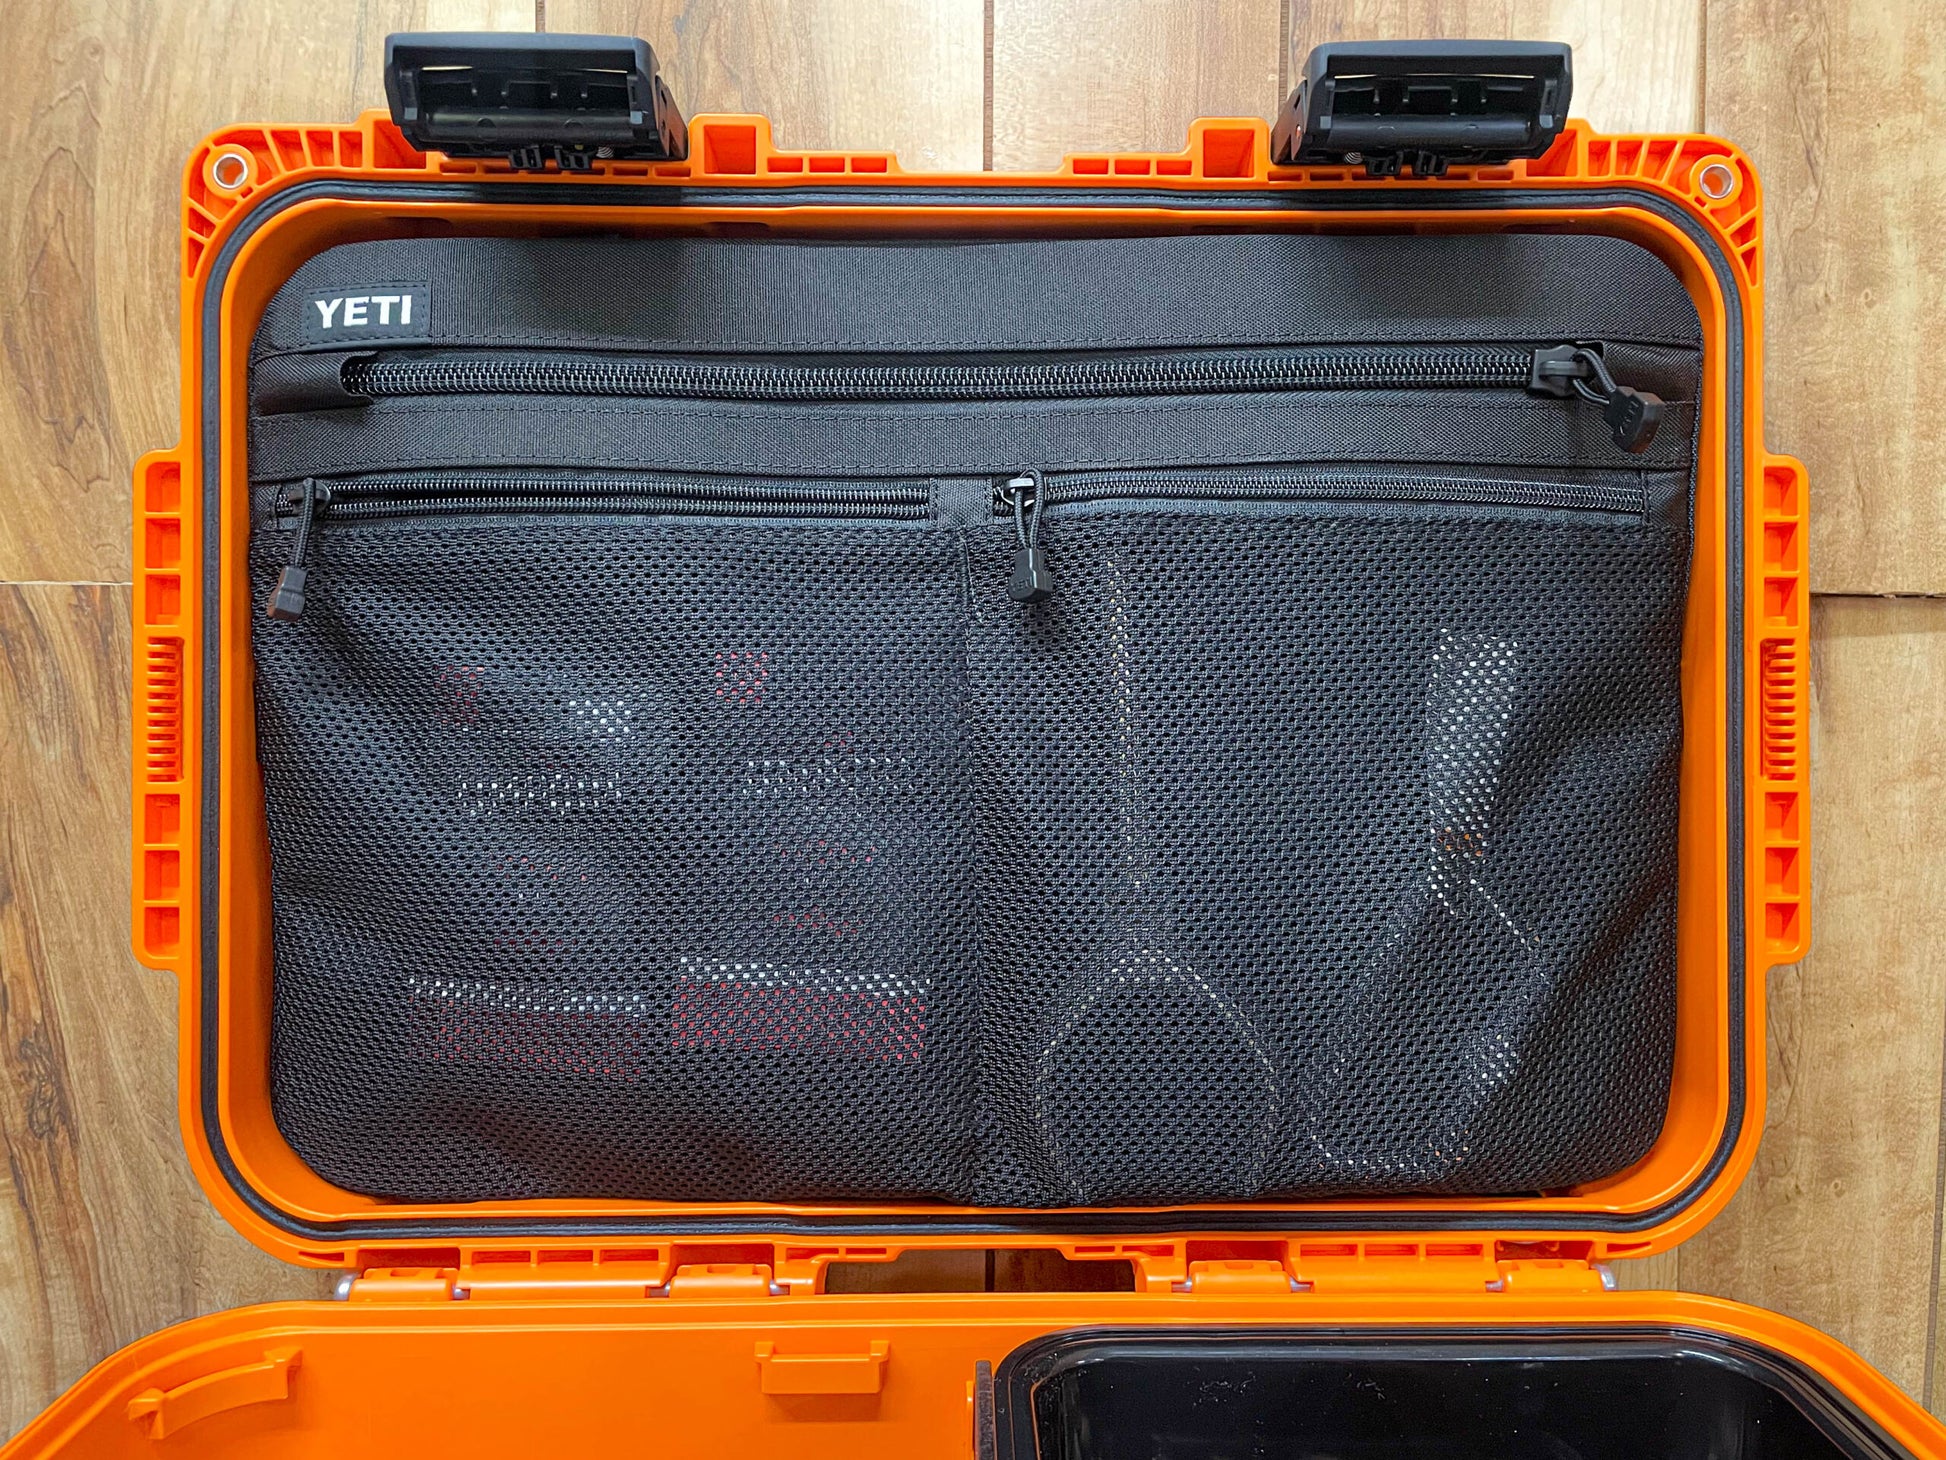 Indestructible Outdoor Gear Cases : Yeti LoadOut GoBox Gear Case